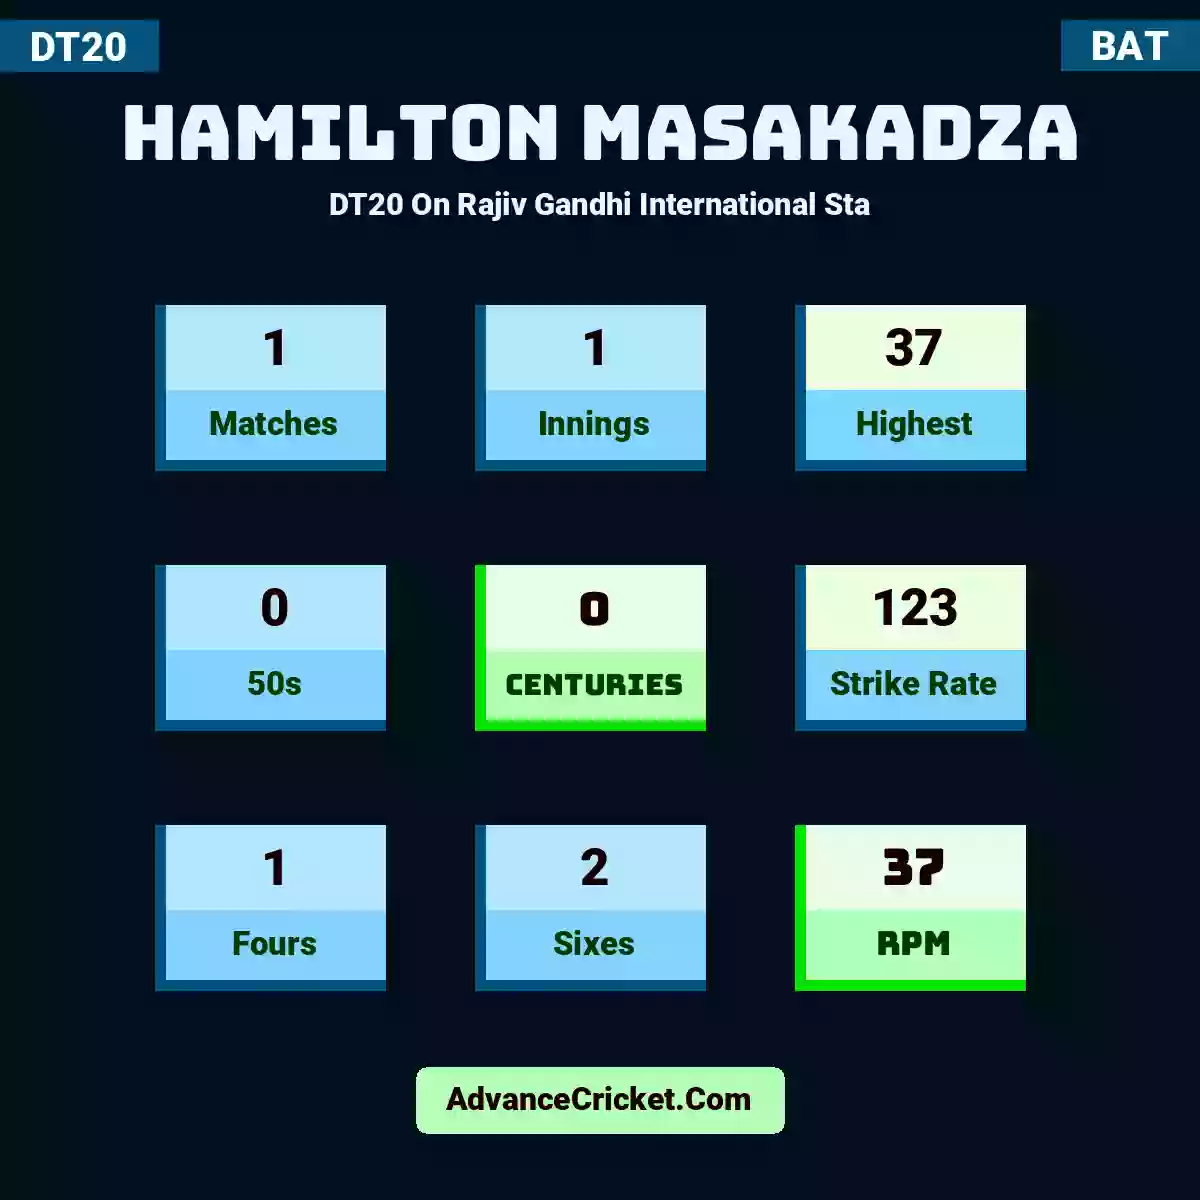 Hamilton Masakadza DT20  On Rajiv Gandhi International Sta, Hamilton Masakadza played 1 matches, scored 37 runs as highest, 0 half-centuries, and 0 centuries, with a strike rate of 123. H.Masakadza hit 1 fours and 2 sixes, with an RPM of 37.